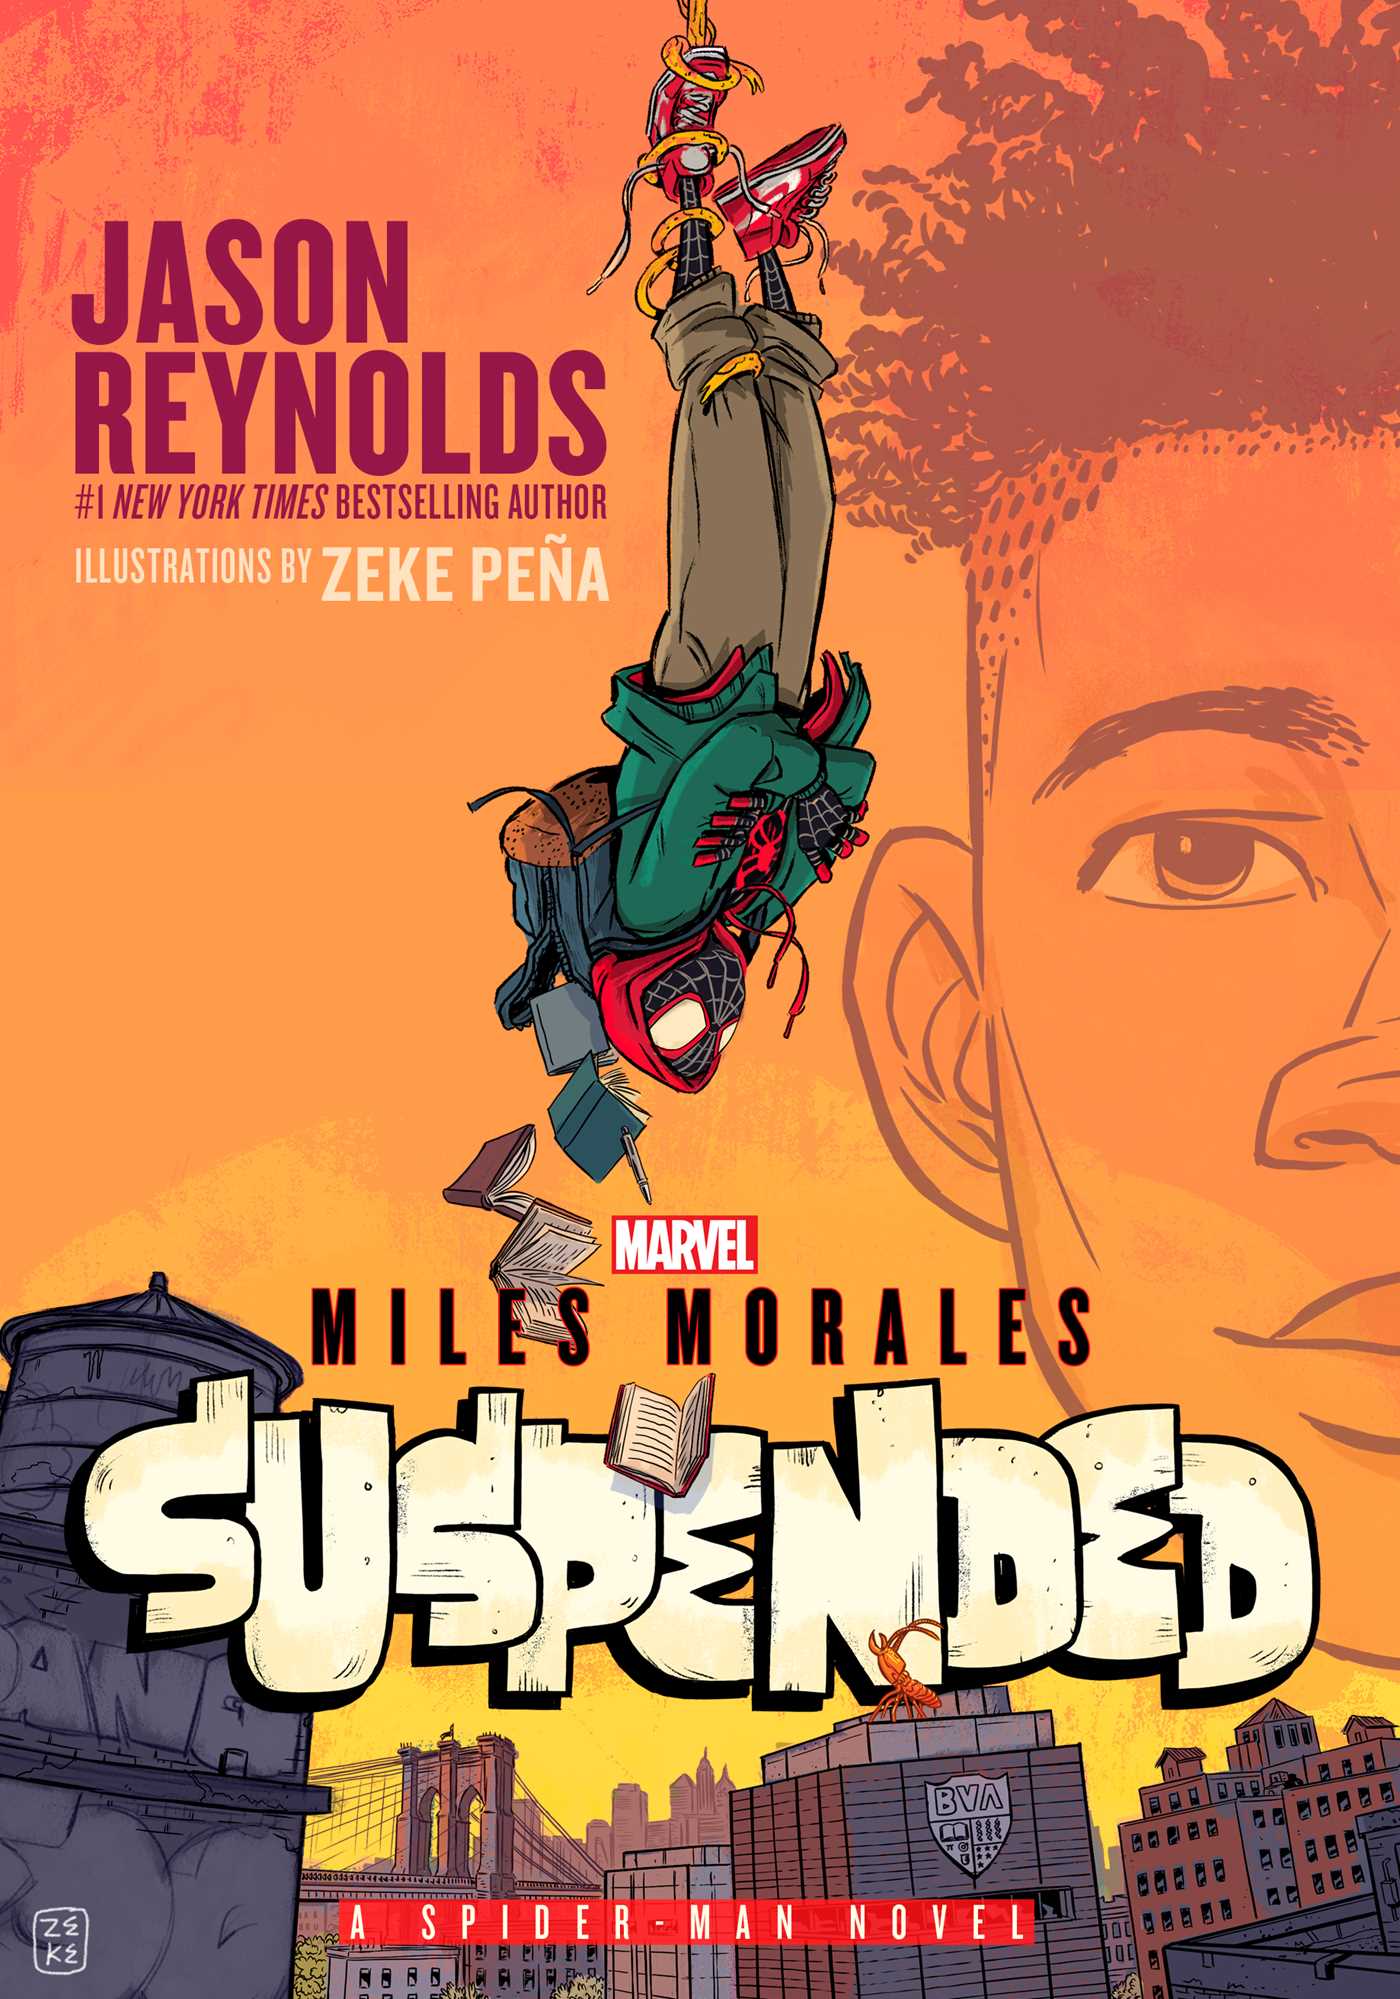 Miles Morales Suspended A Spider-Man Novel cover image